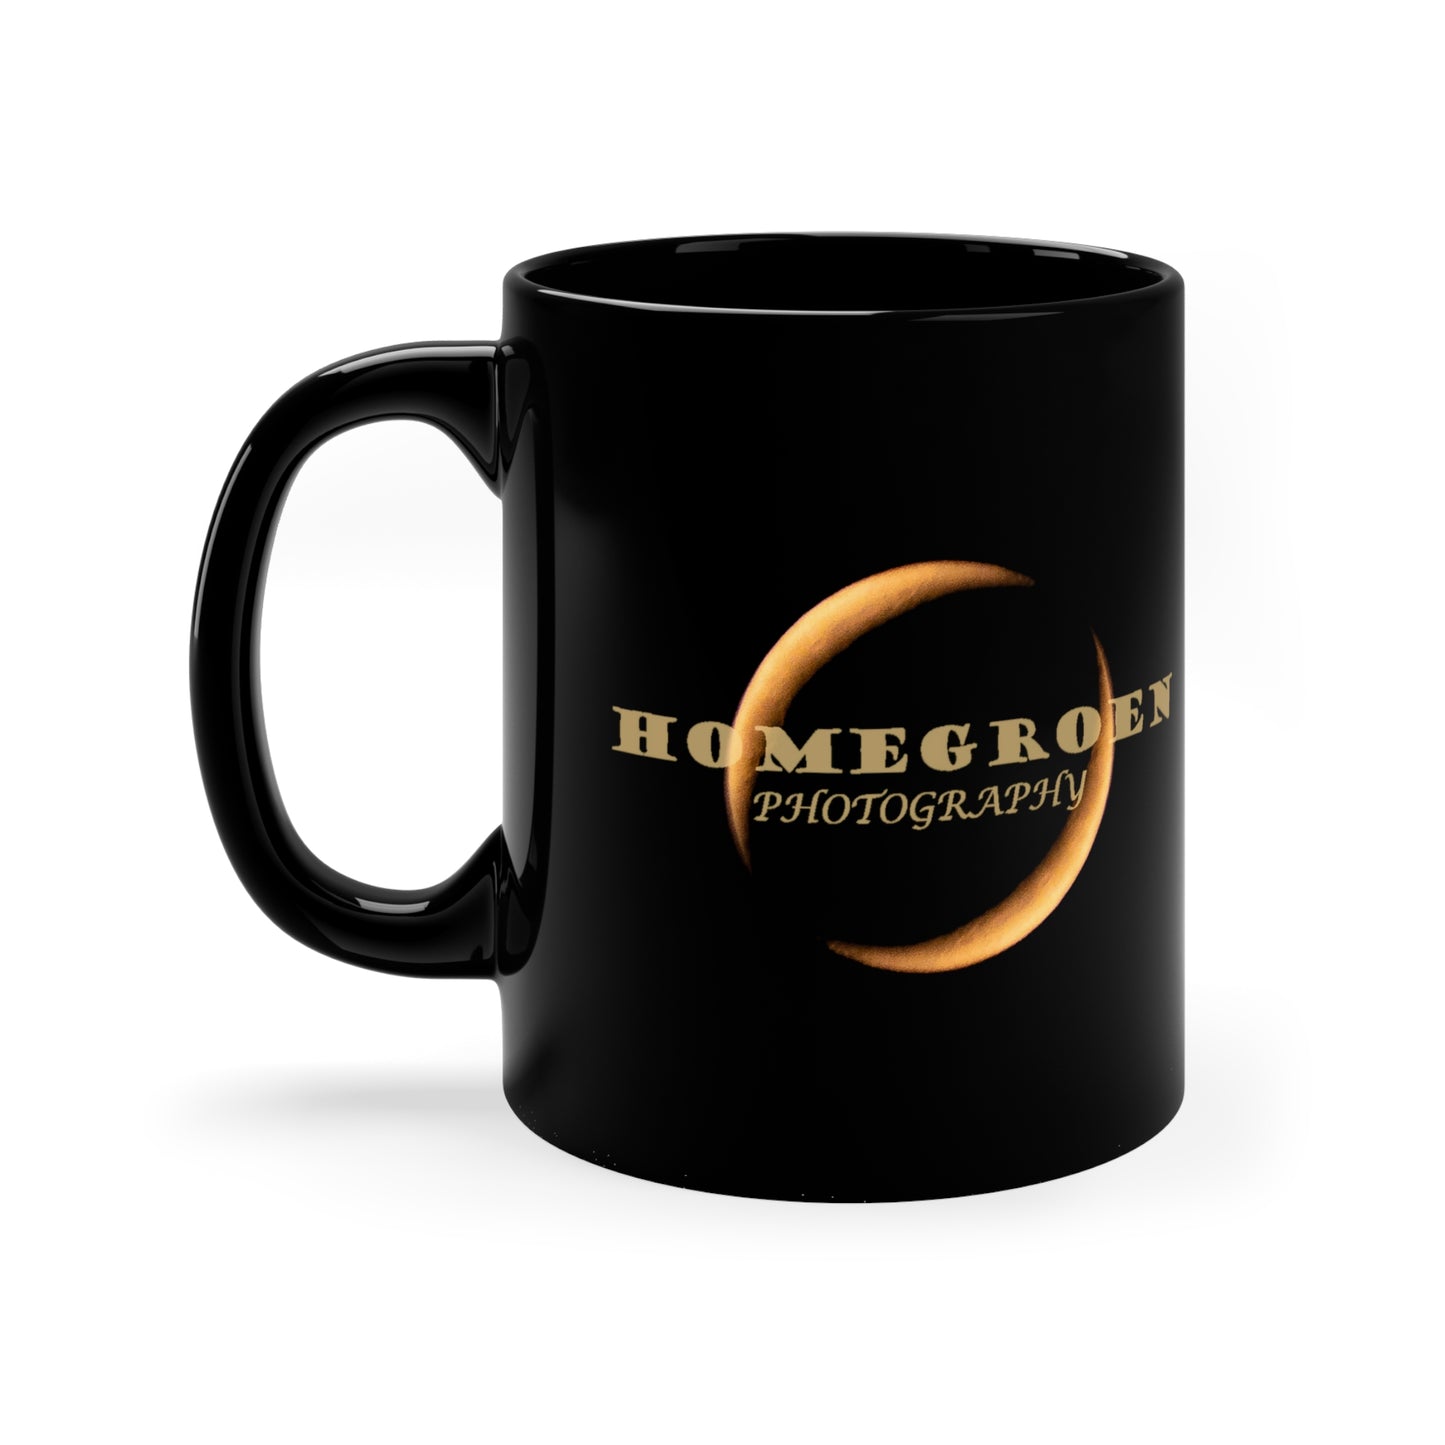 Black Mug with HomeGroen Photography Logo